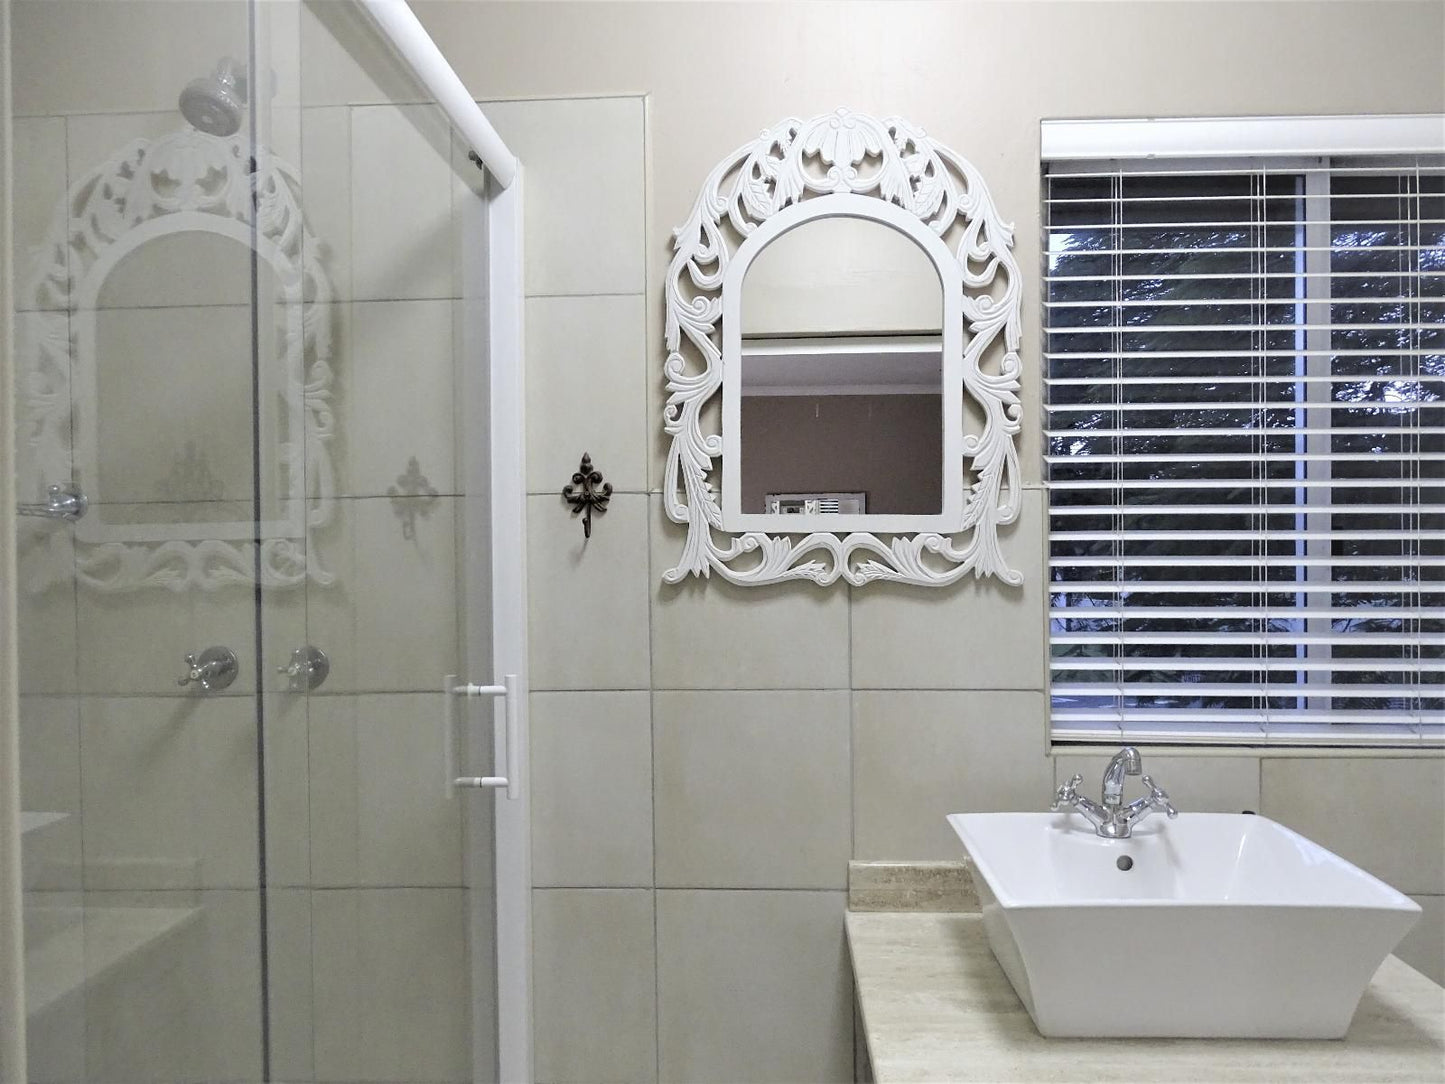 Hamelin Guest House Grosvenor Durban Kwazulu Natal South Africa Unsaturated, Bathroom